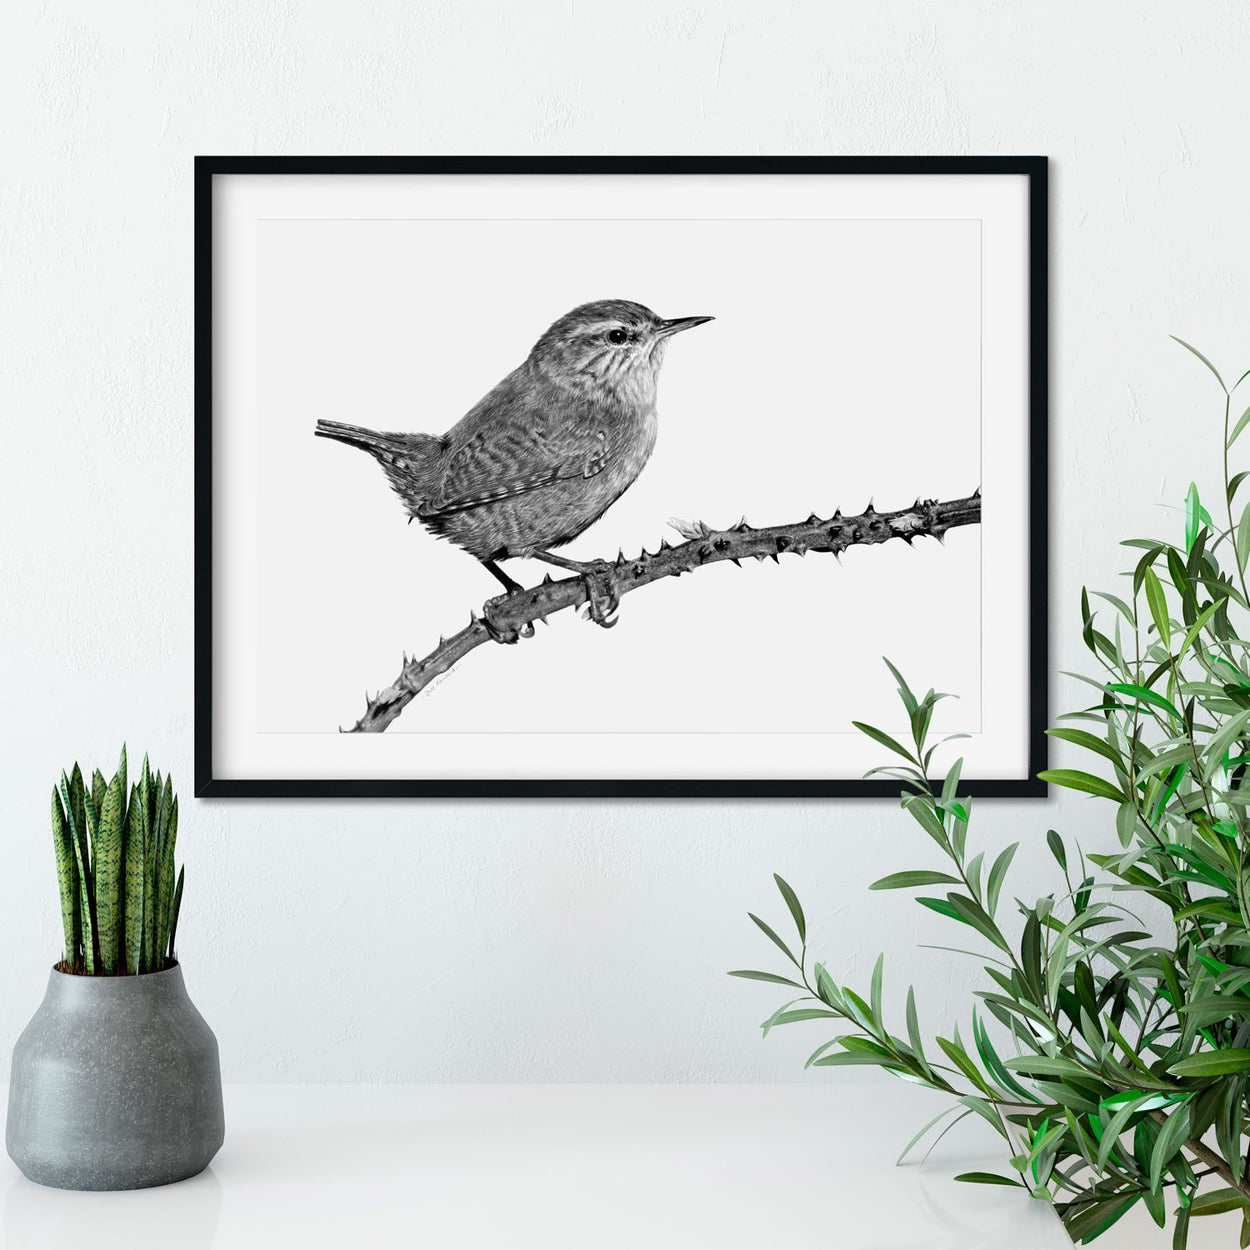 Wren Bird Drawing on Wall - The Thriving Wild